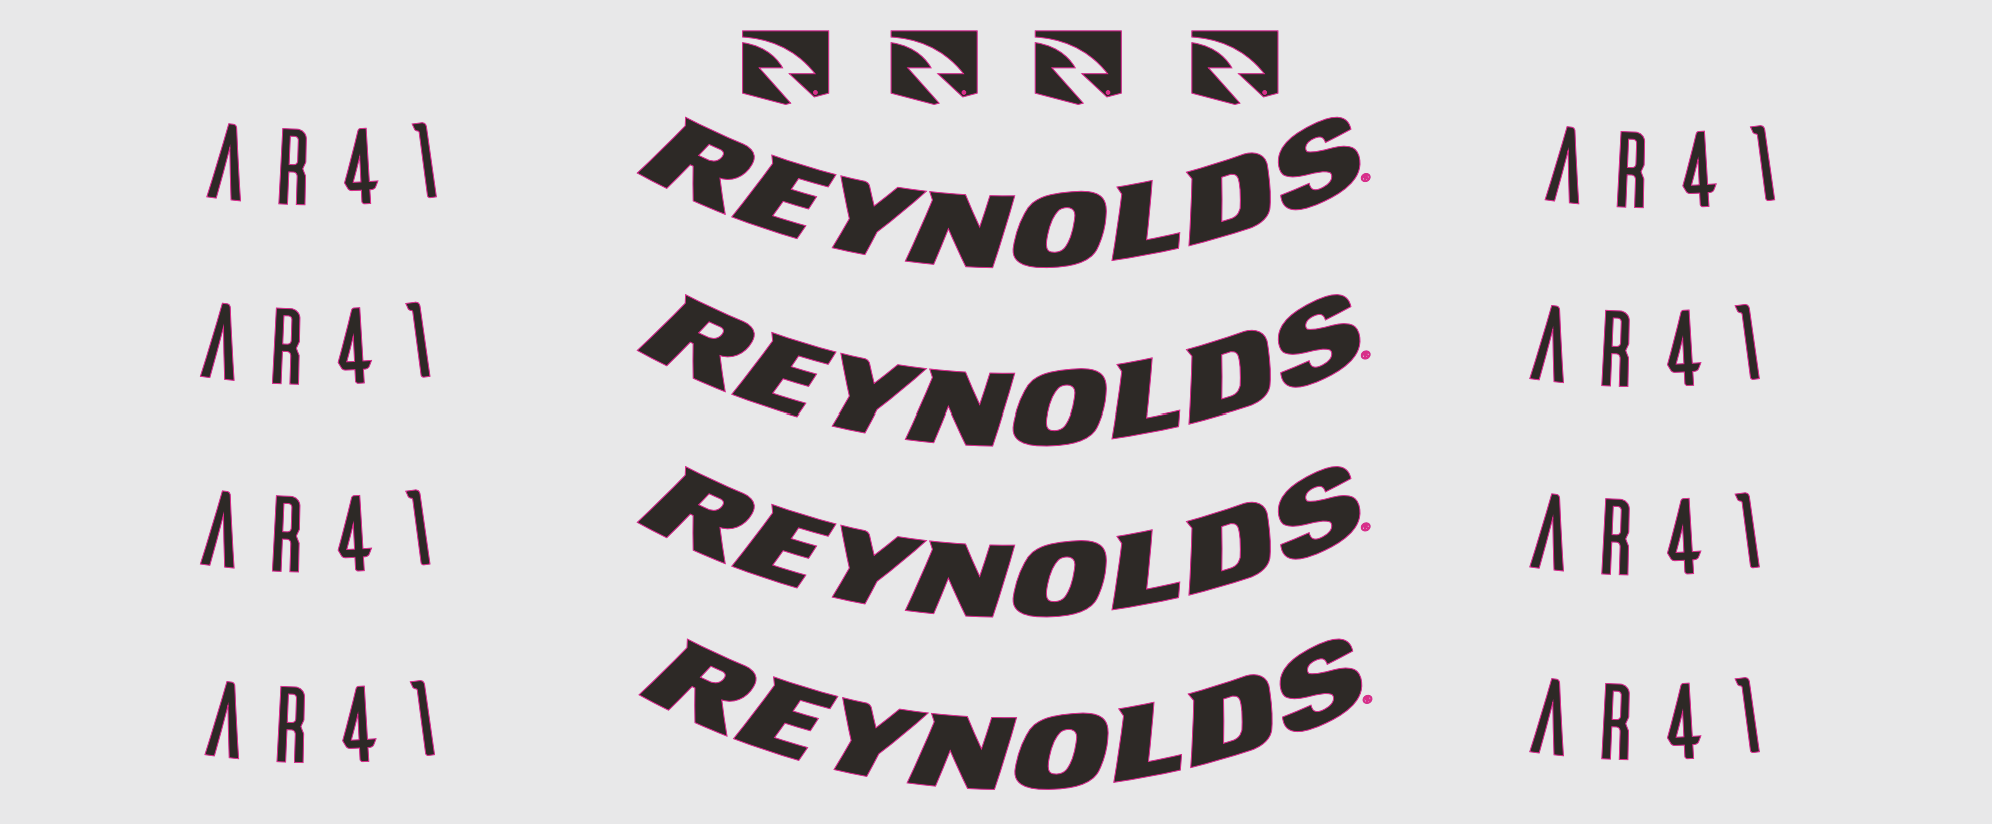 Reynolds Wheel Decal Kit Decal Ar41 DB Polepy Kolies